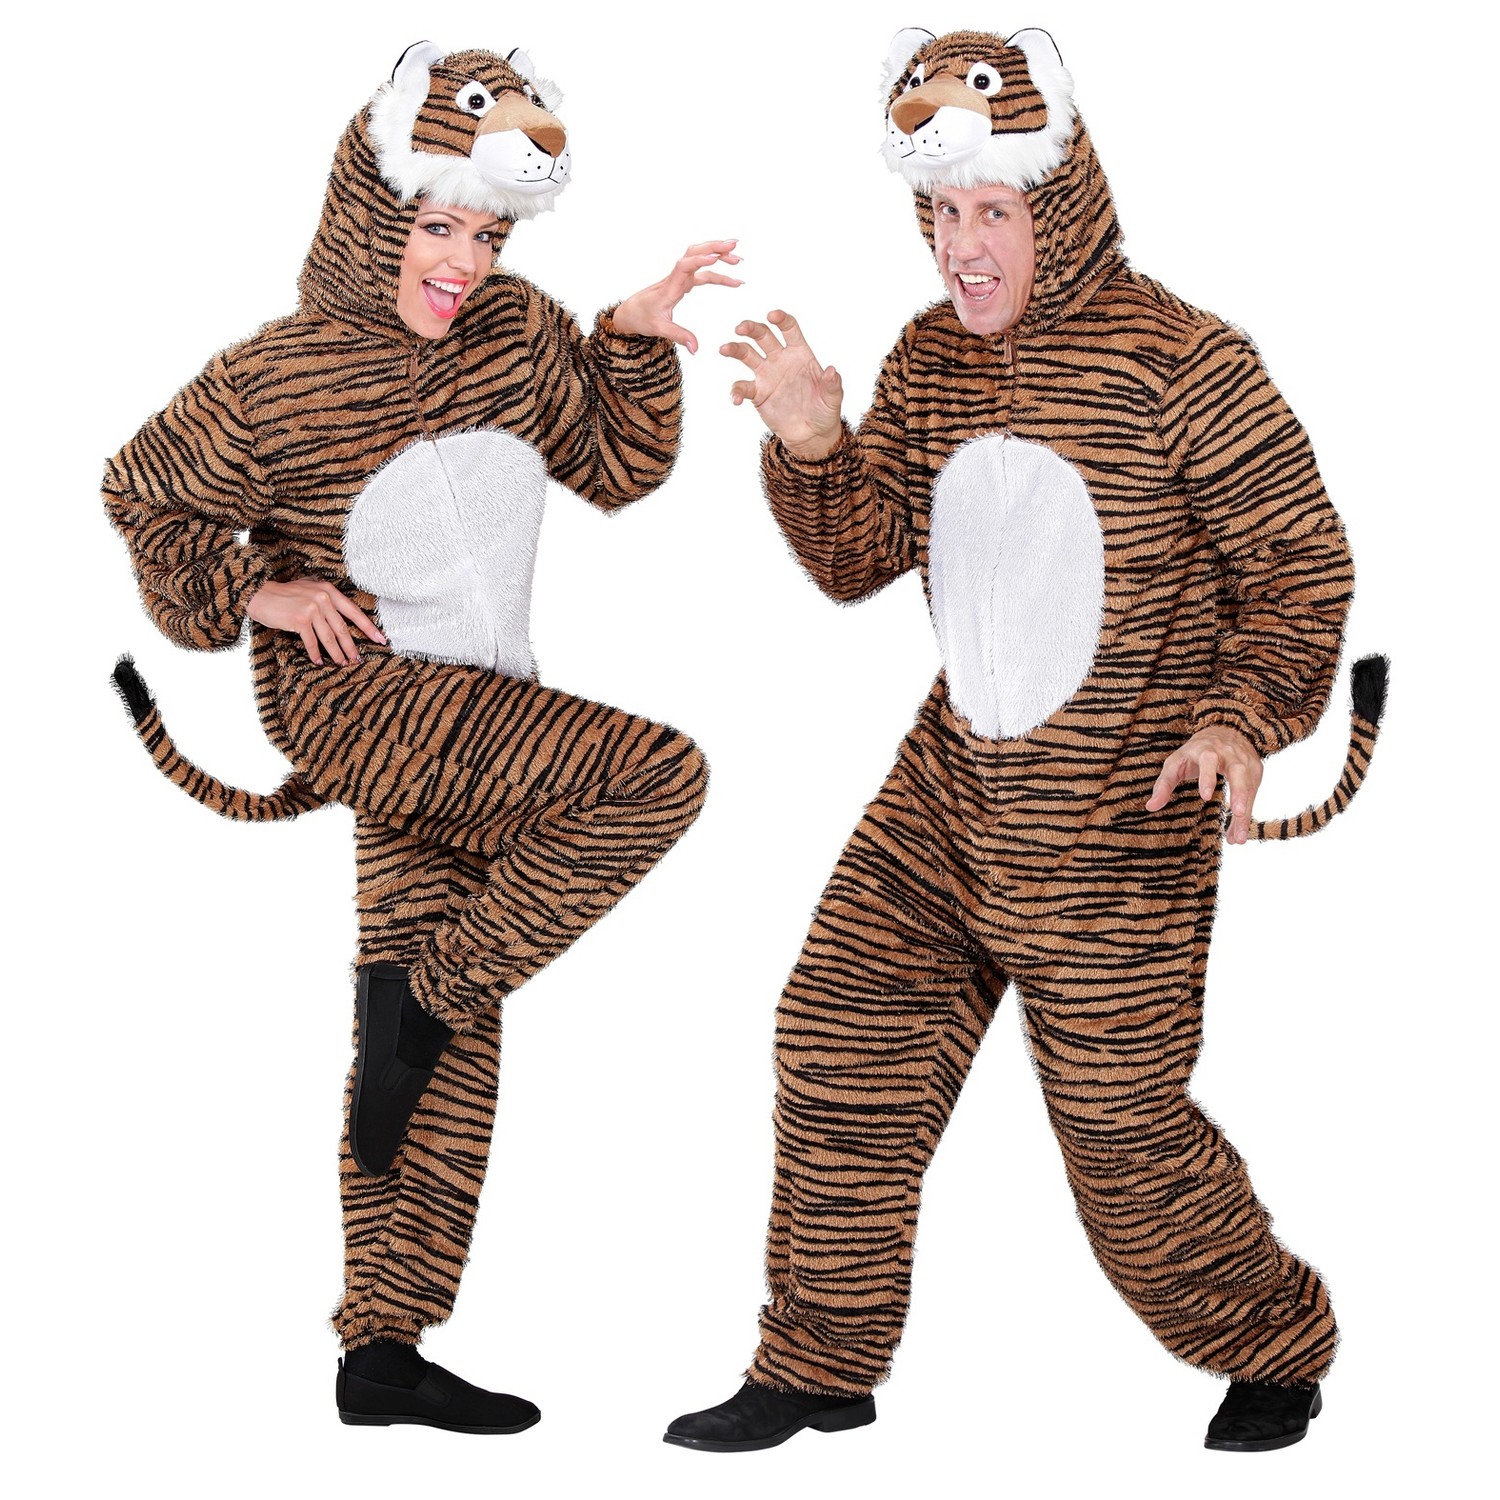 tijger kostuums voor carnaval e-Carnavalskleding